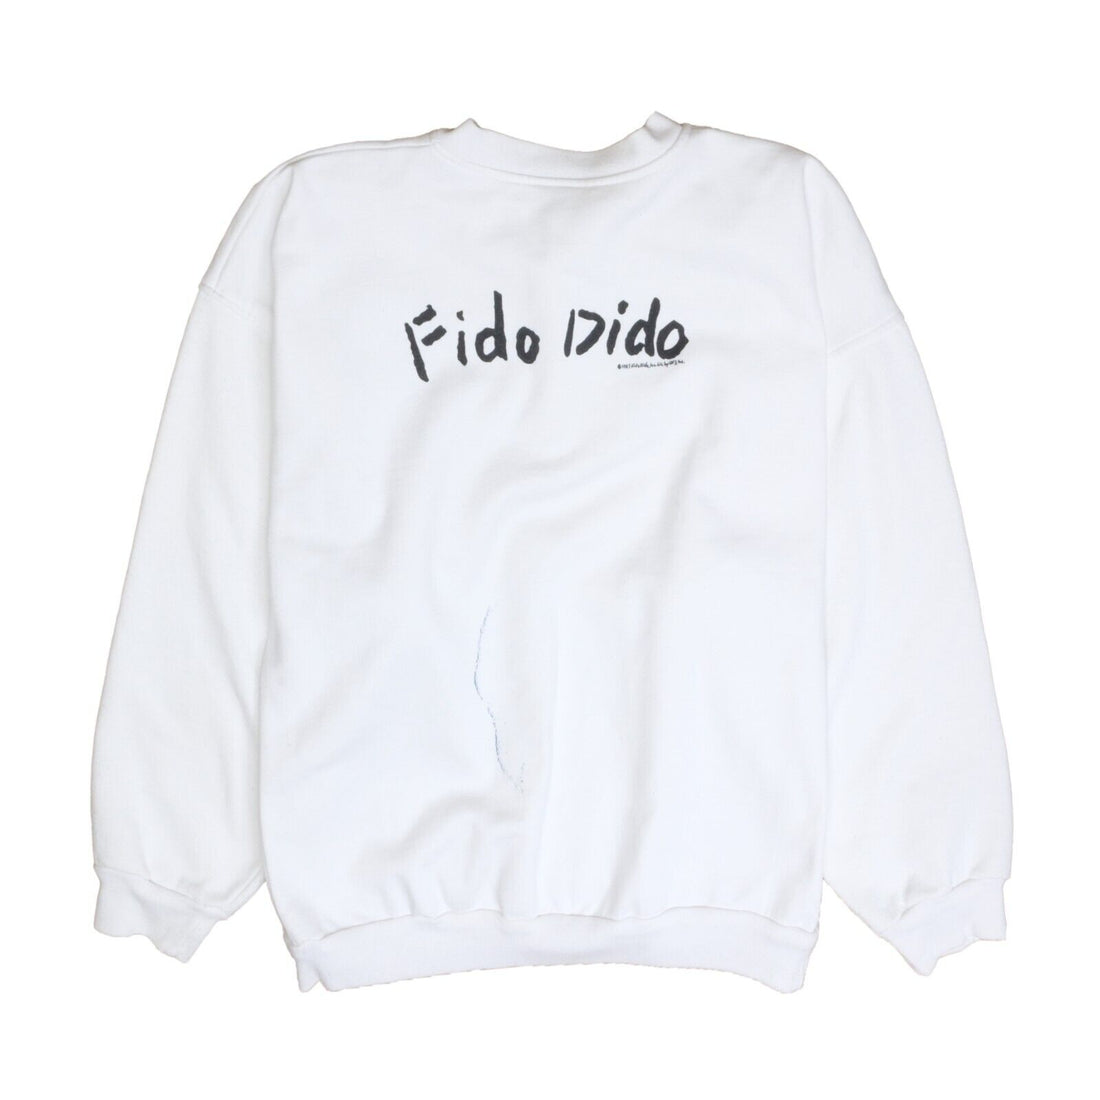 Vintage 7Up Fido Dido Billiards Sweatshirt Size XL Promo 1985 80s